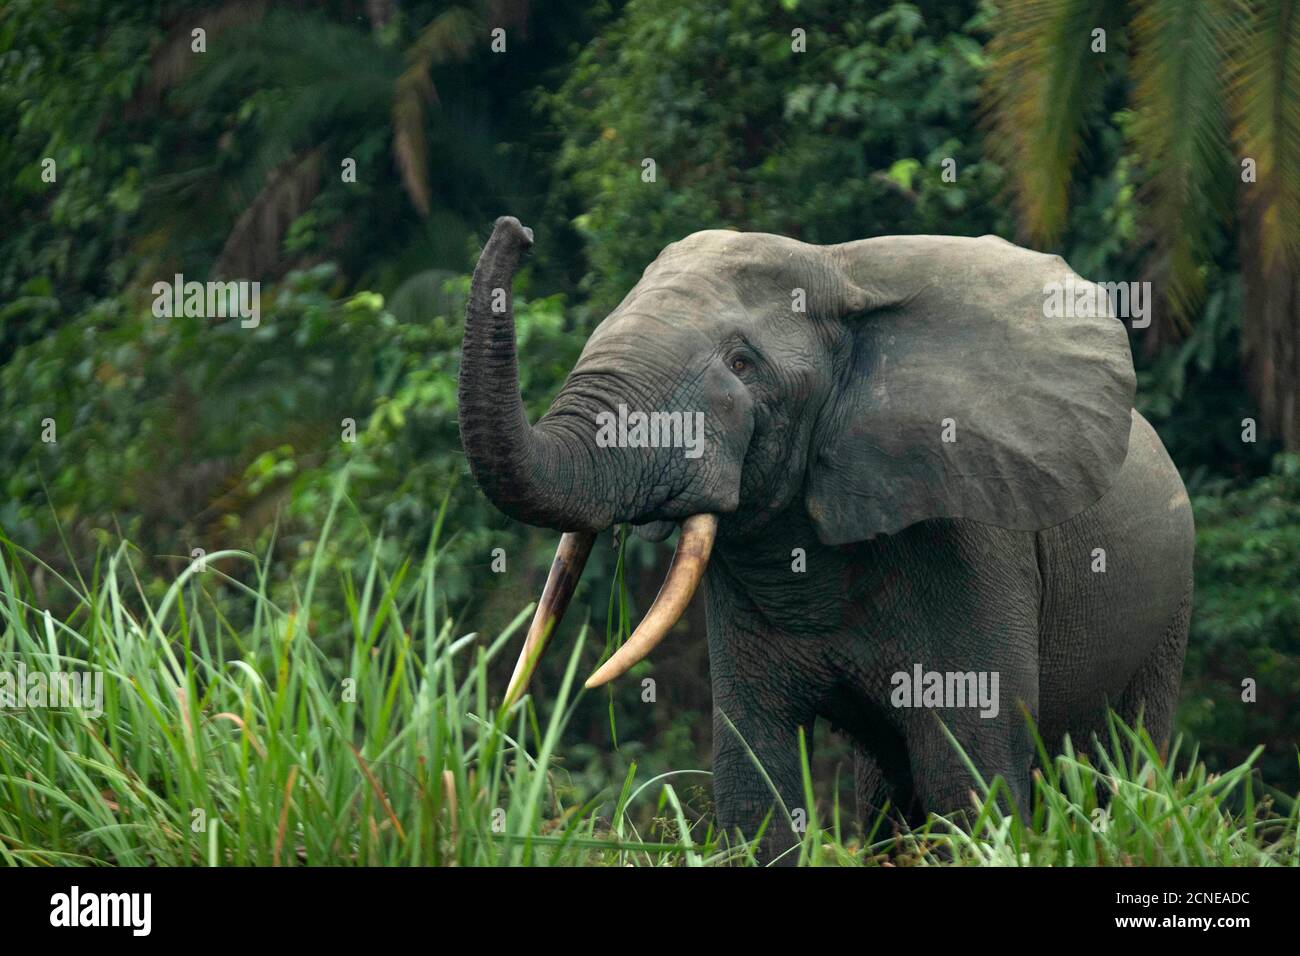 African forest elephant (Loxodonta cyclotis), Odzala-Kokoua National Park, Republic of the Congo, Africa Stock Photo